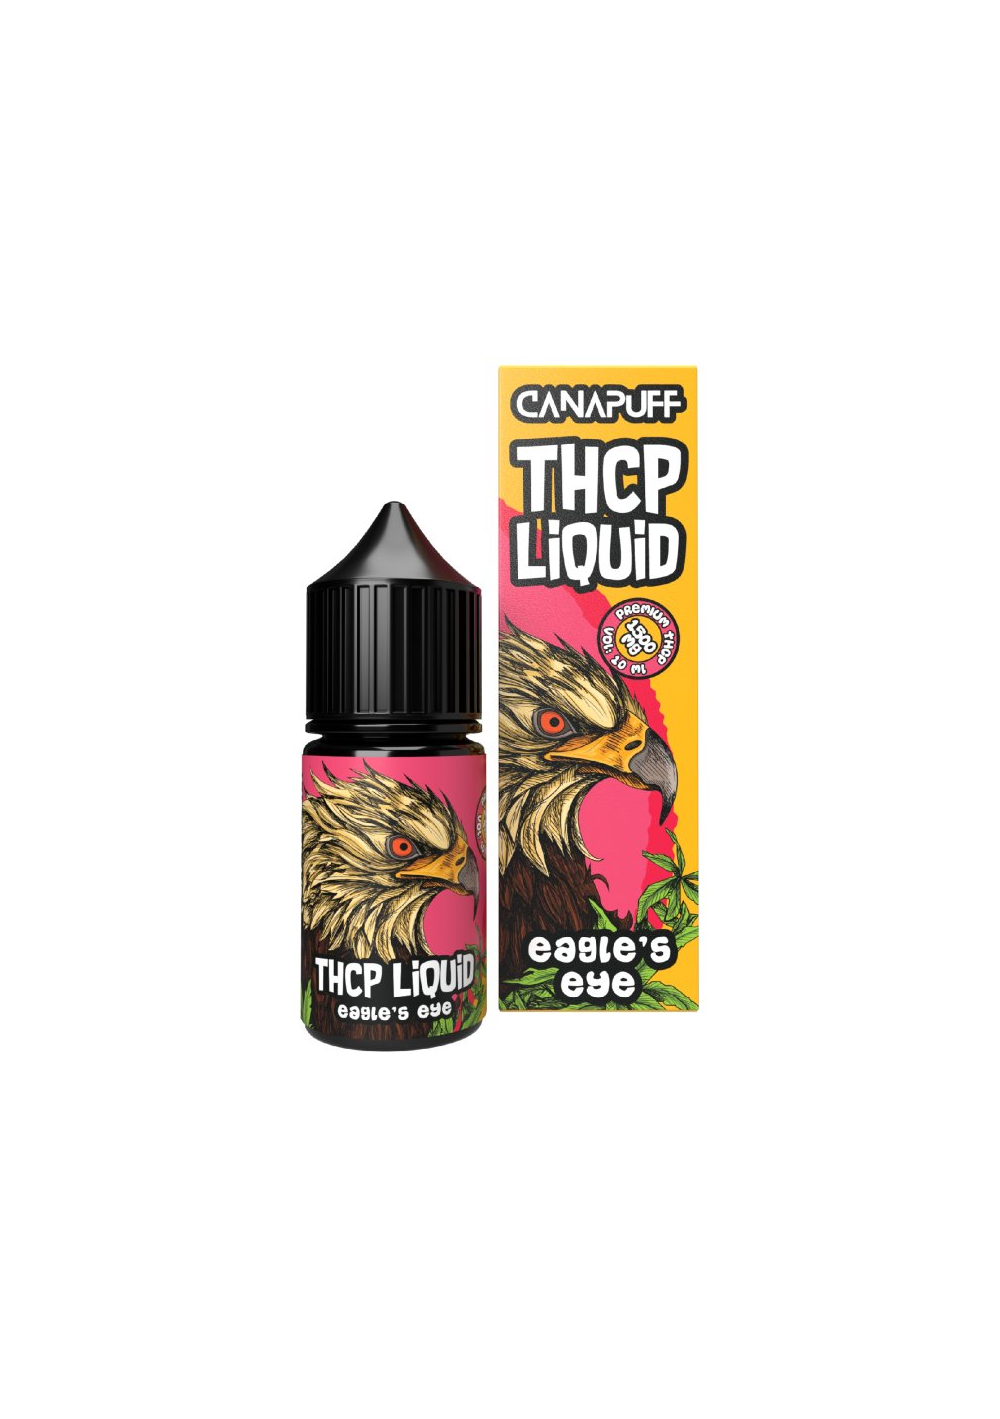 THC-P Liquido Svapo 79% - Eagle's Eye, 10ml - 1500mg THCp - Canapuff